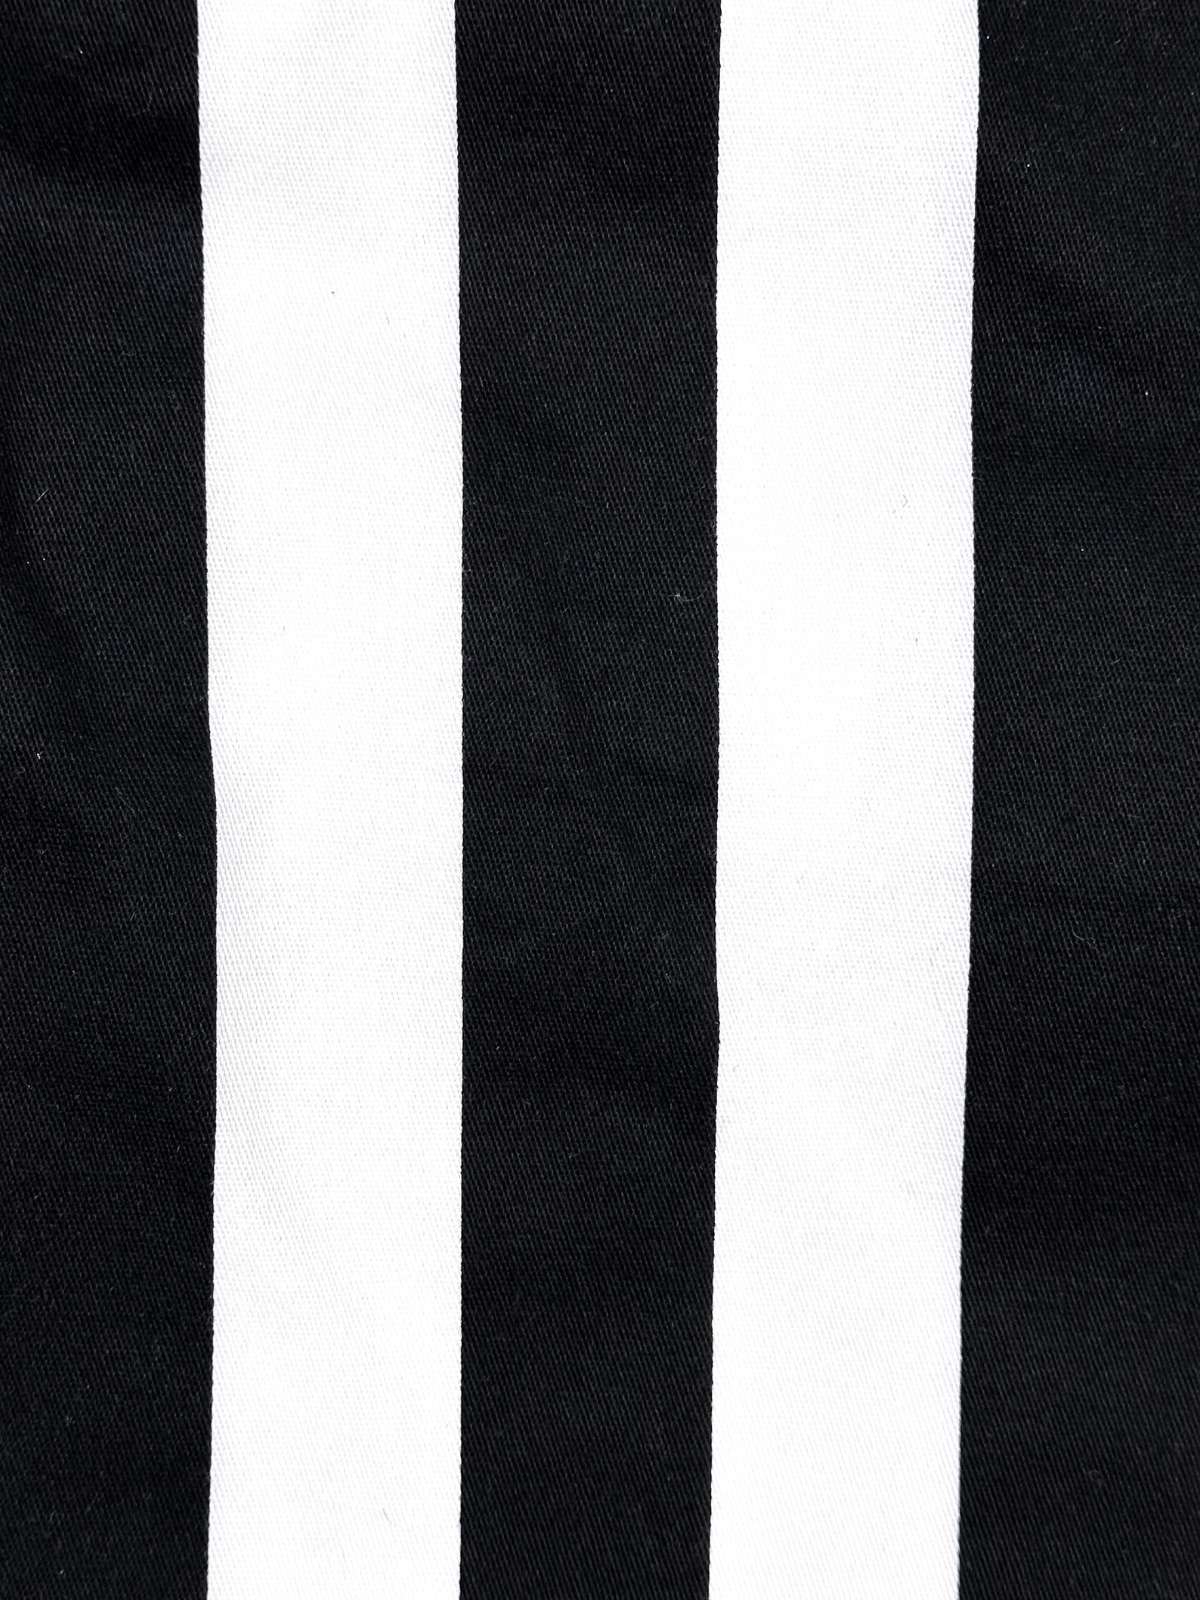 Beetlejuice Stripe Cotton Short - Black/White